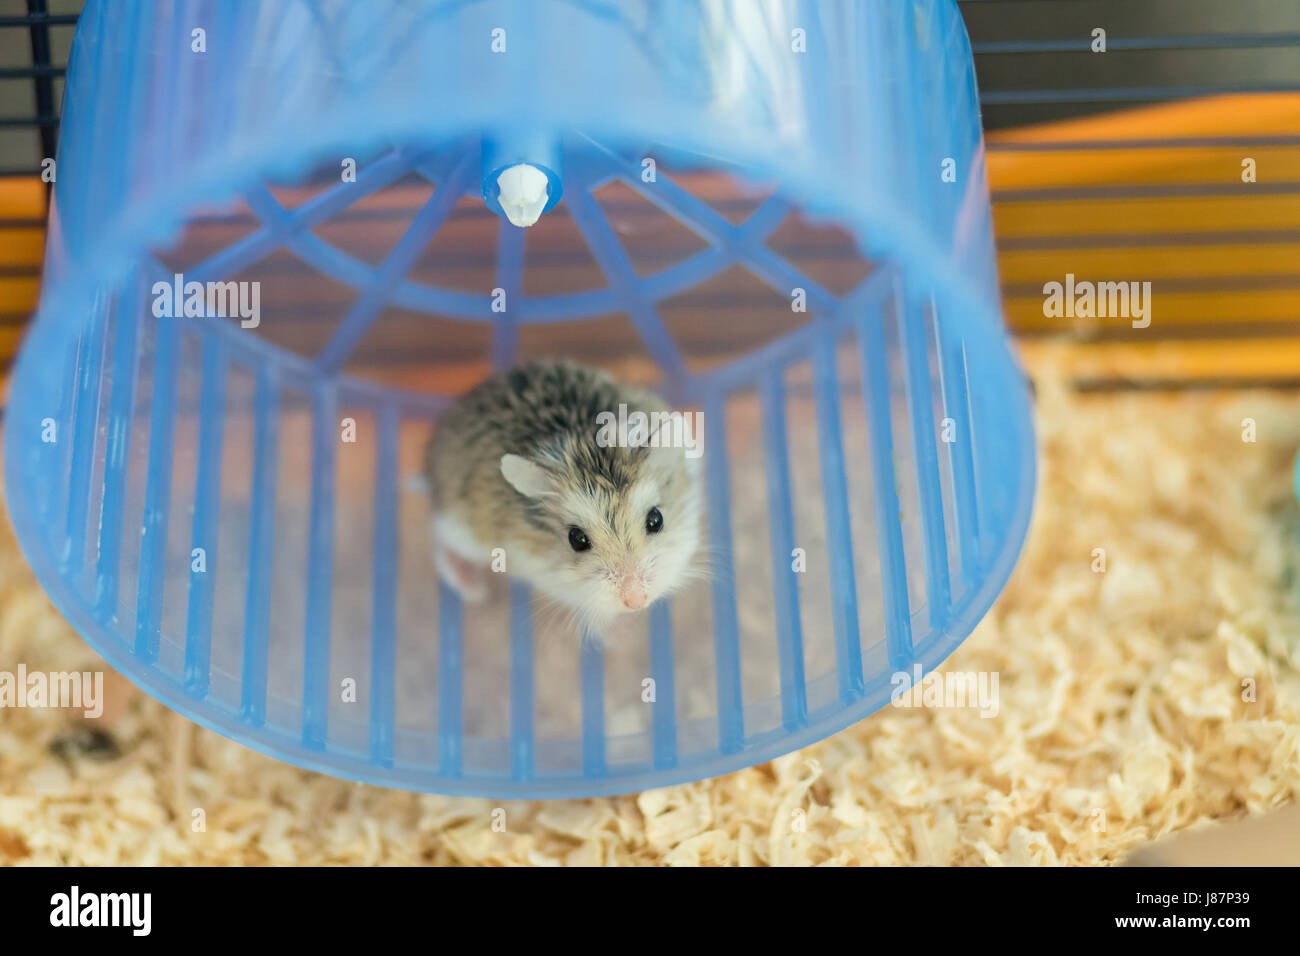 Dwarf Roborovski hamster in spinning wheel Stock Photo